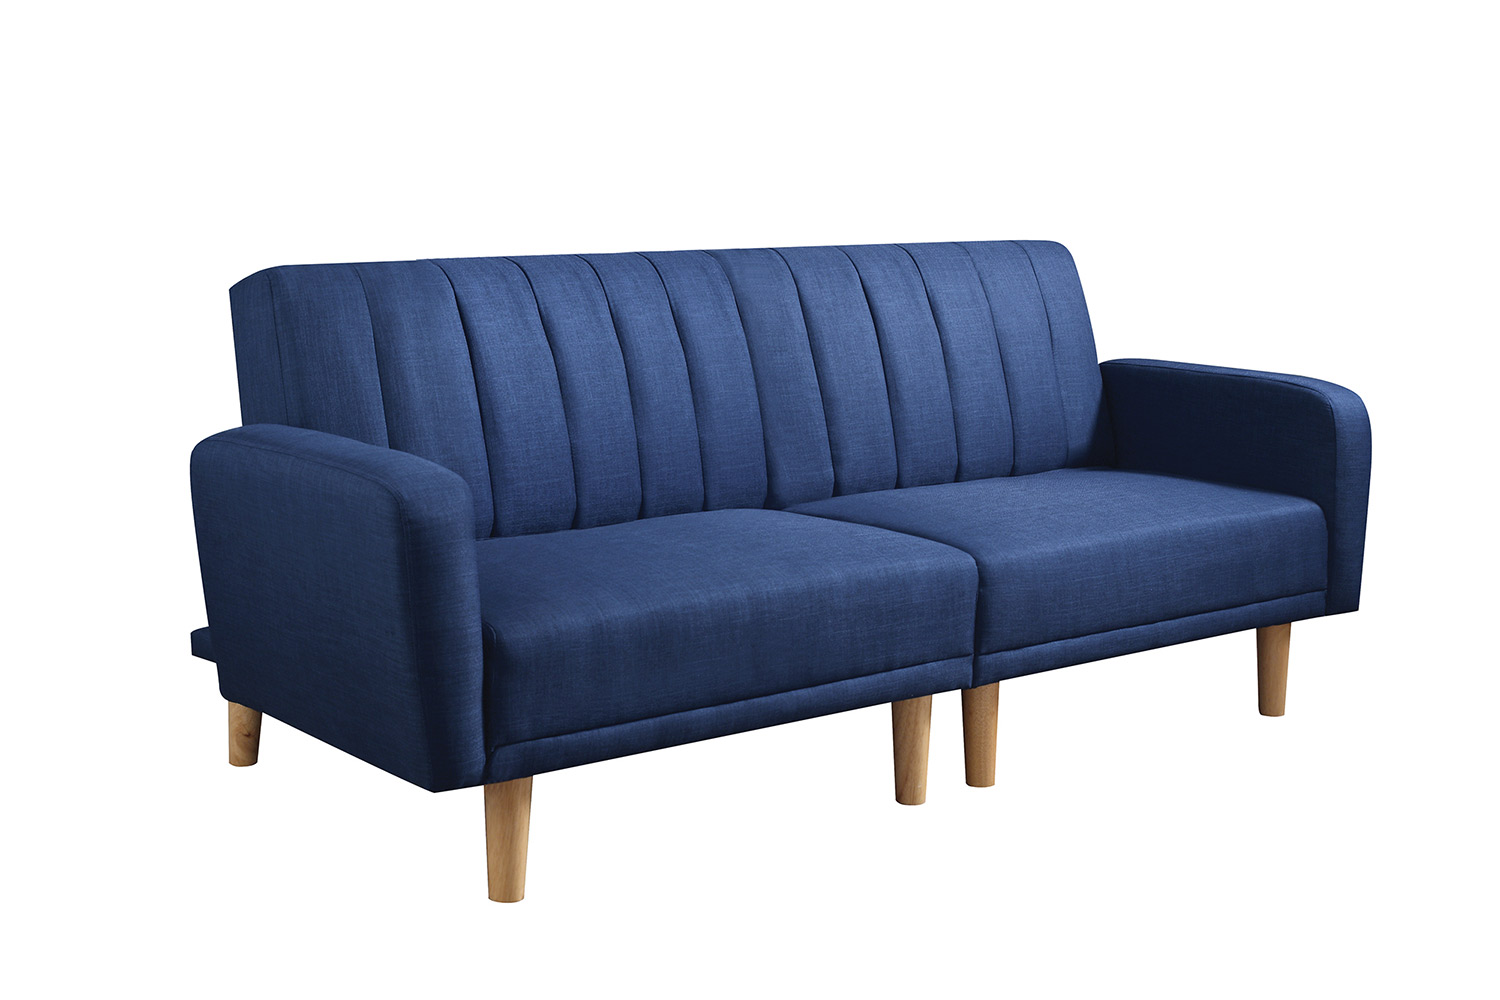 Coaster Shaywood Sofa Bed - Blue